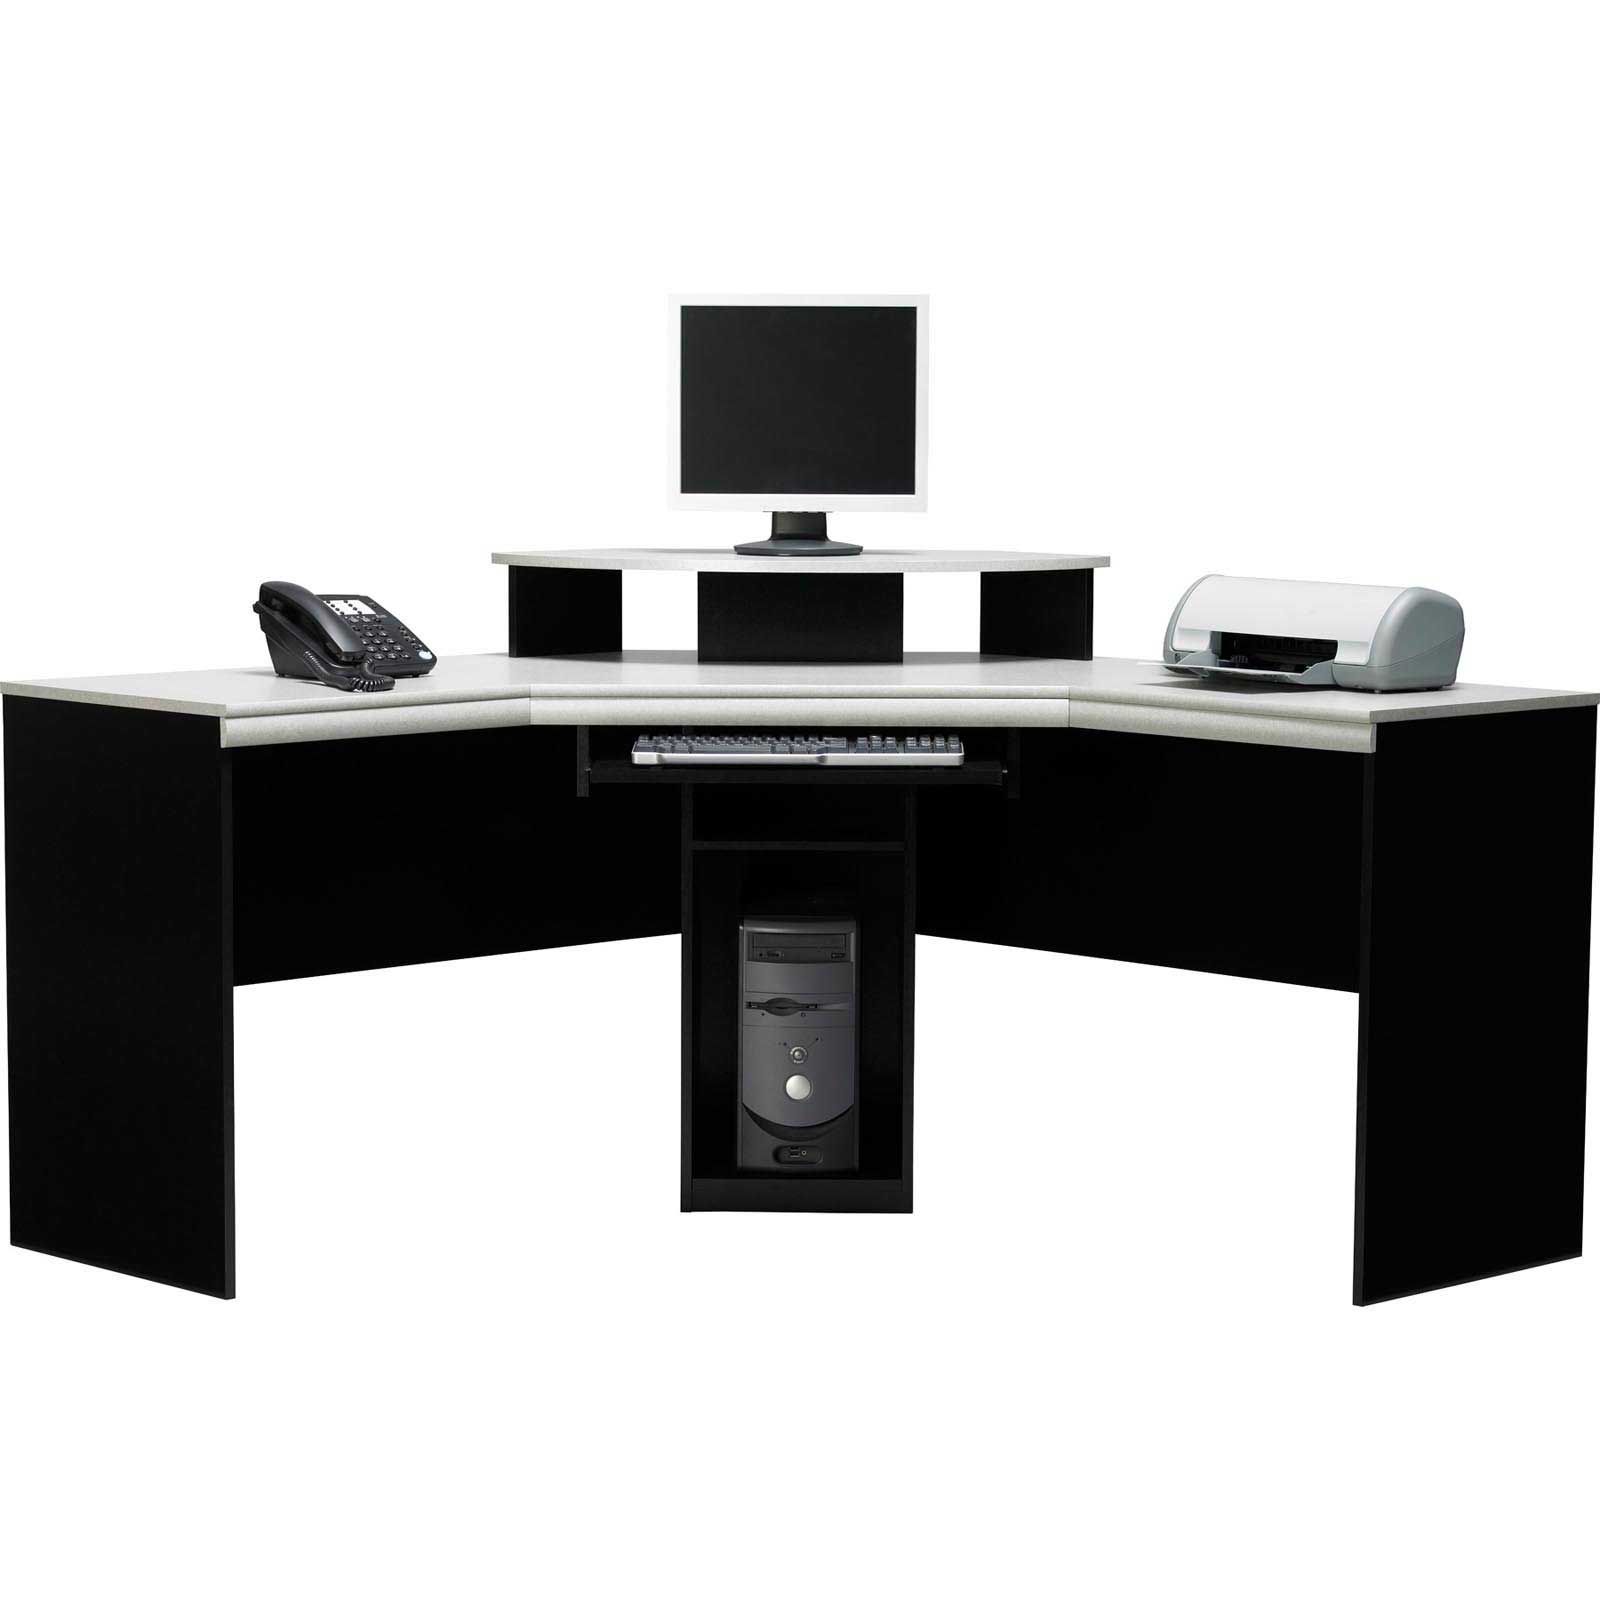 Star Dreams Homes Computer Desk Black